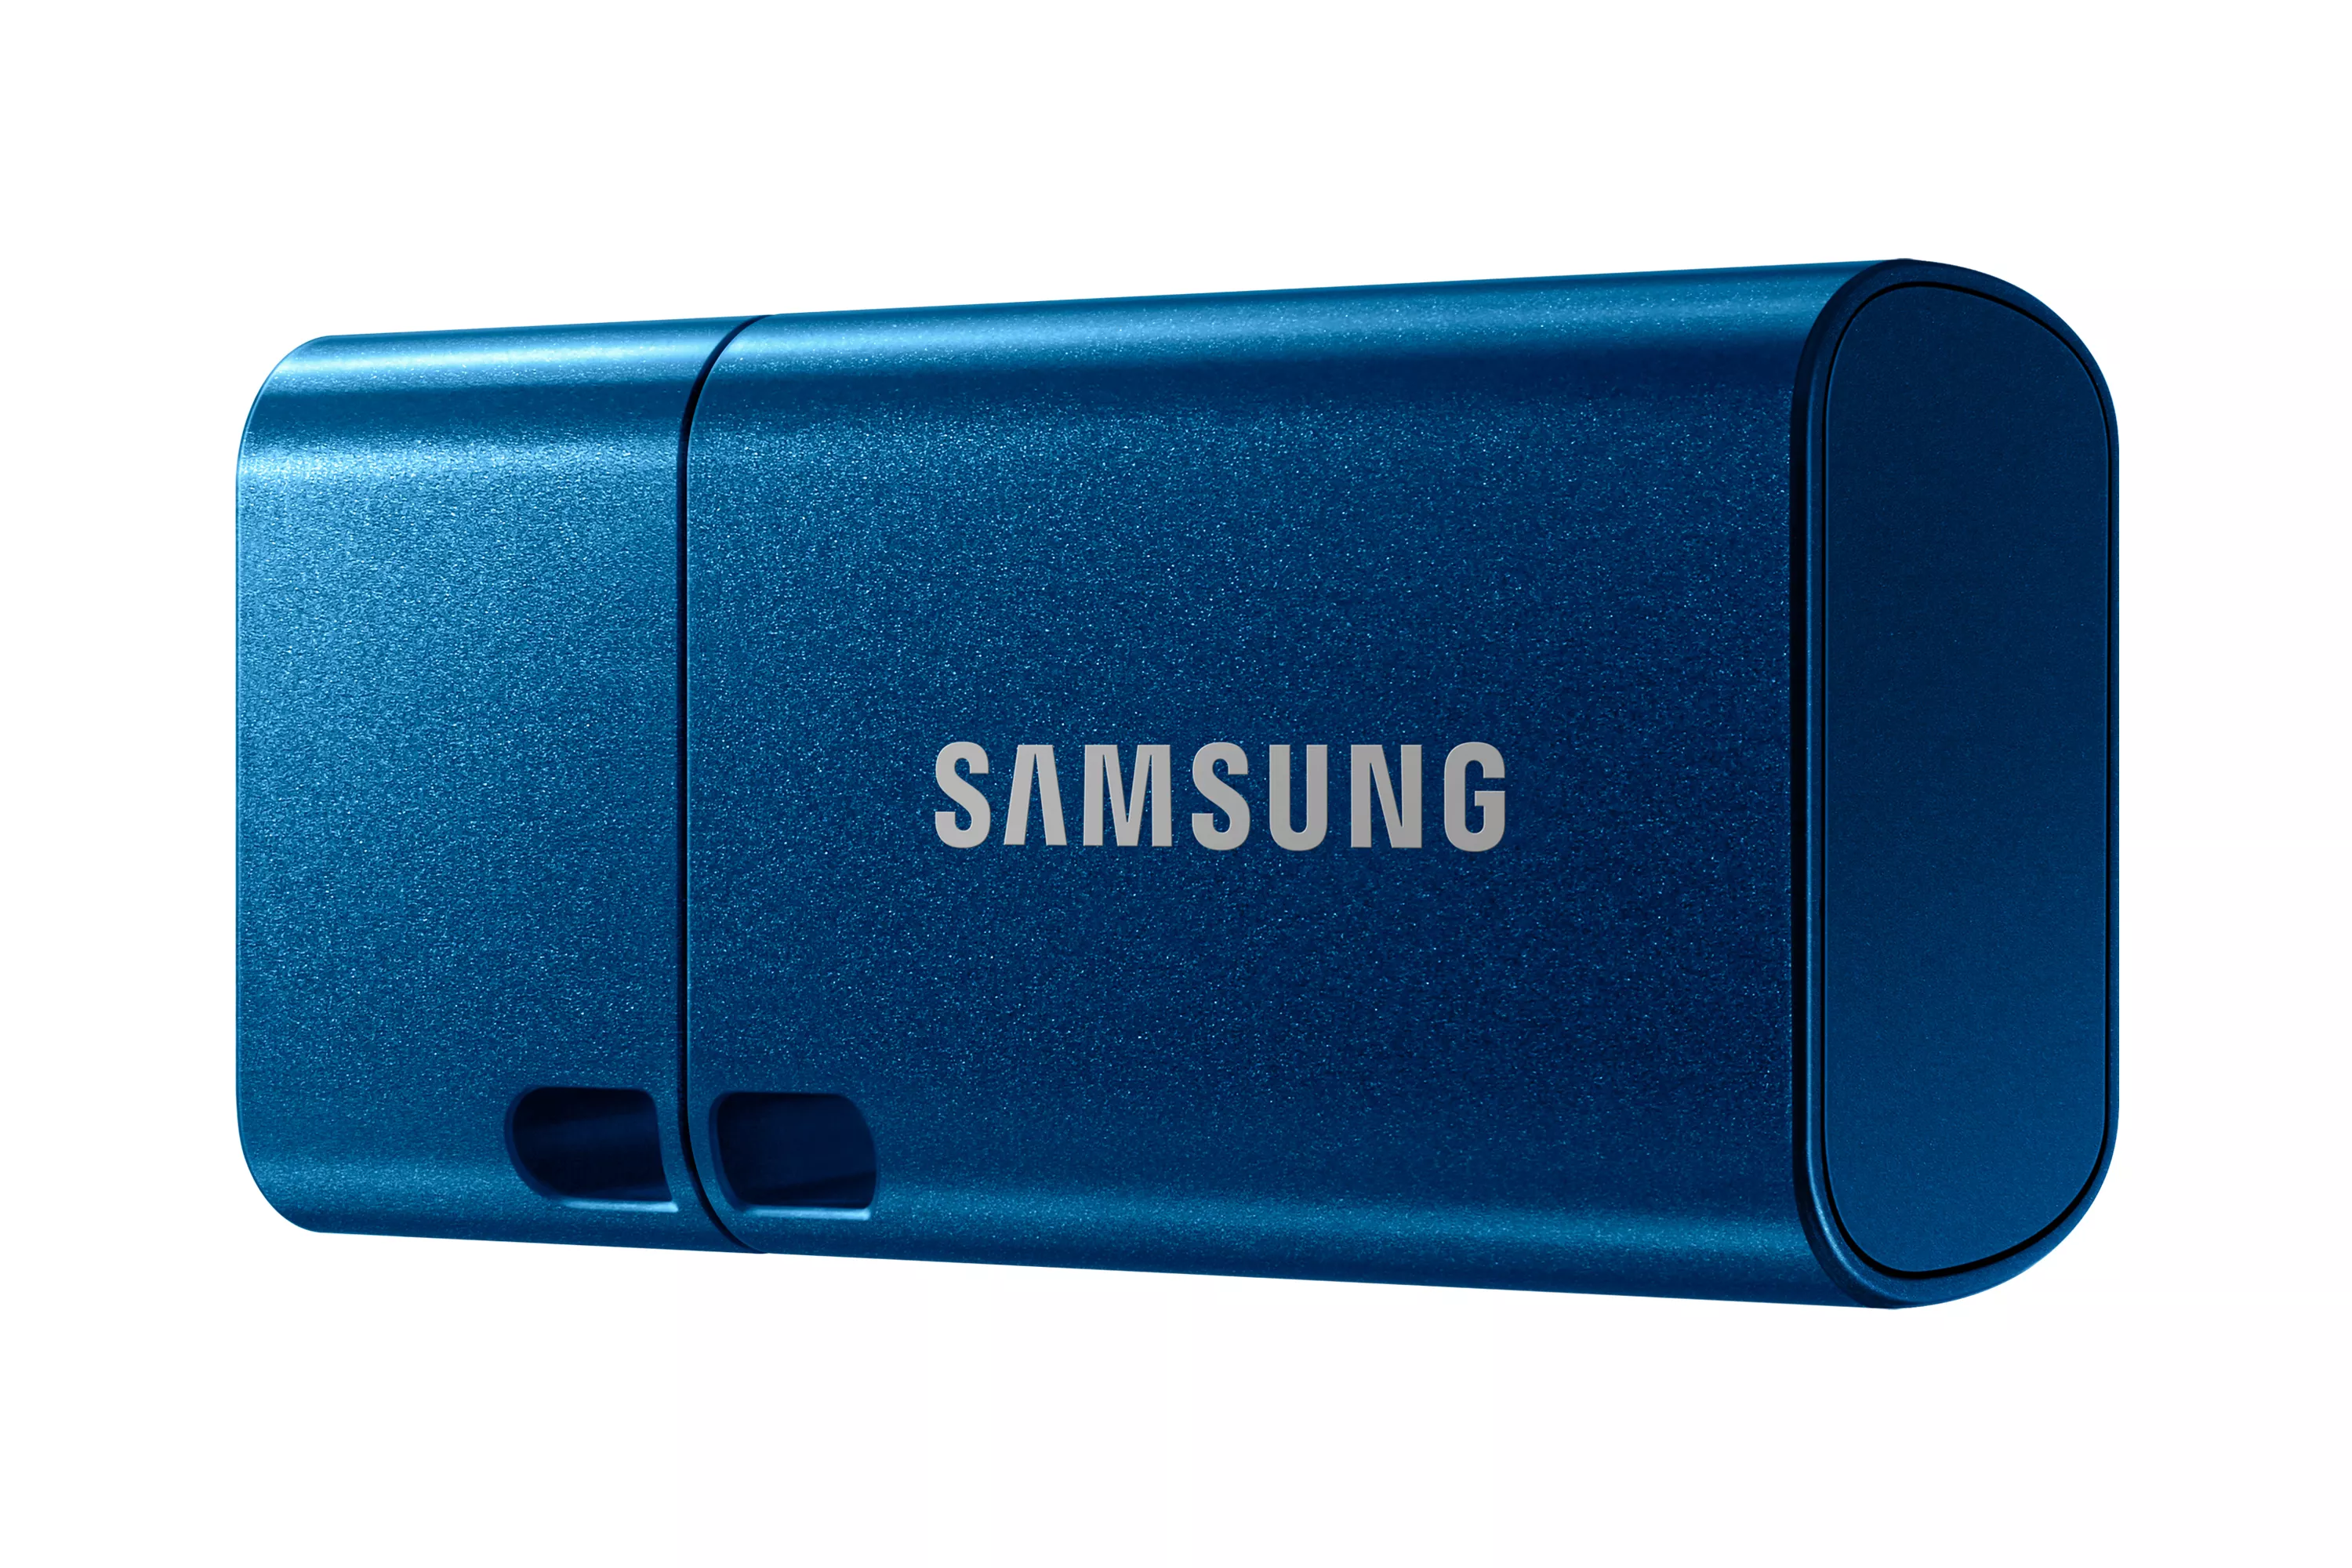 Vente SAMSUNG USB Type-C 128Go 400Mo/s USB 3.1 Flash Samsung au meilleur prix - visuel 2